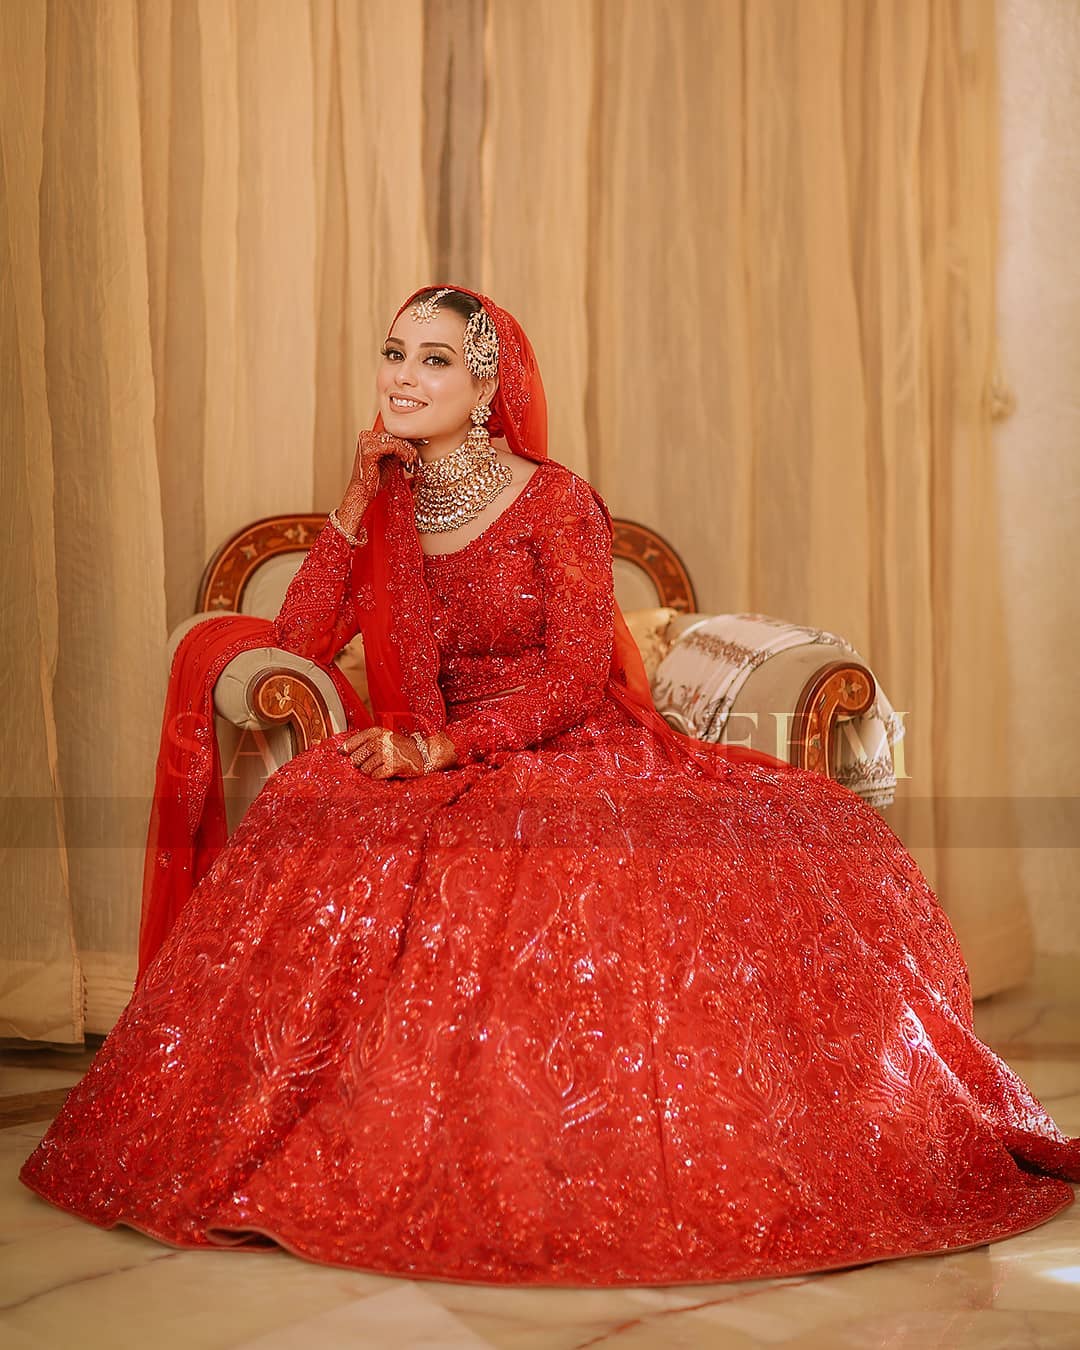 Beautiful HD Pictures of Iqra Aziz and Yasir Hussain Wedding